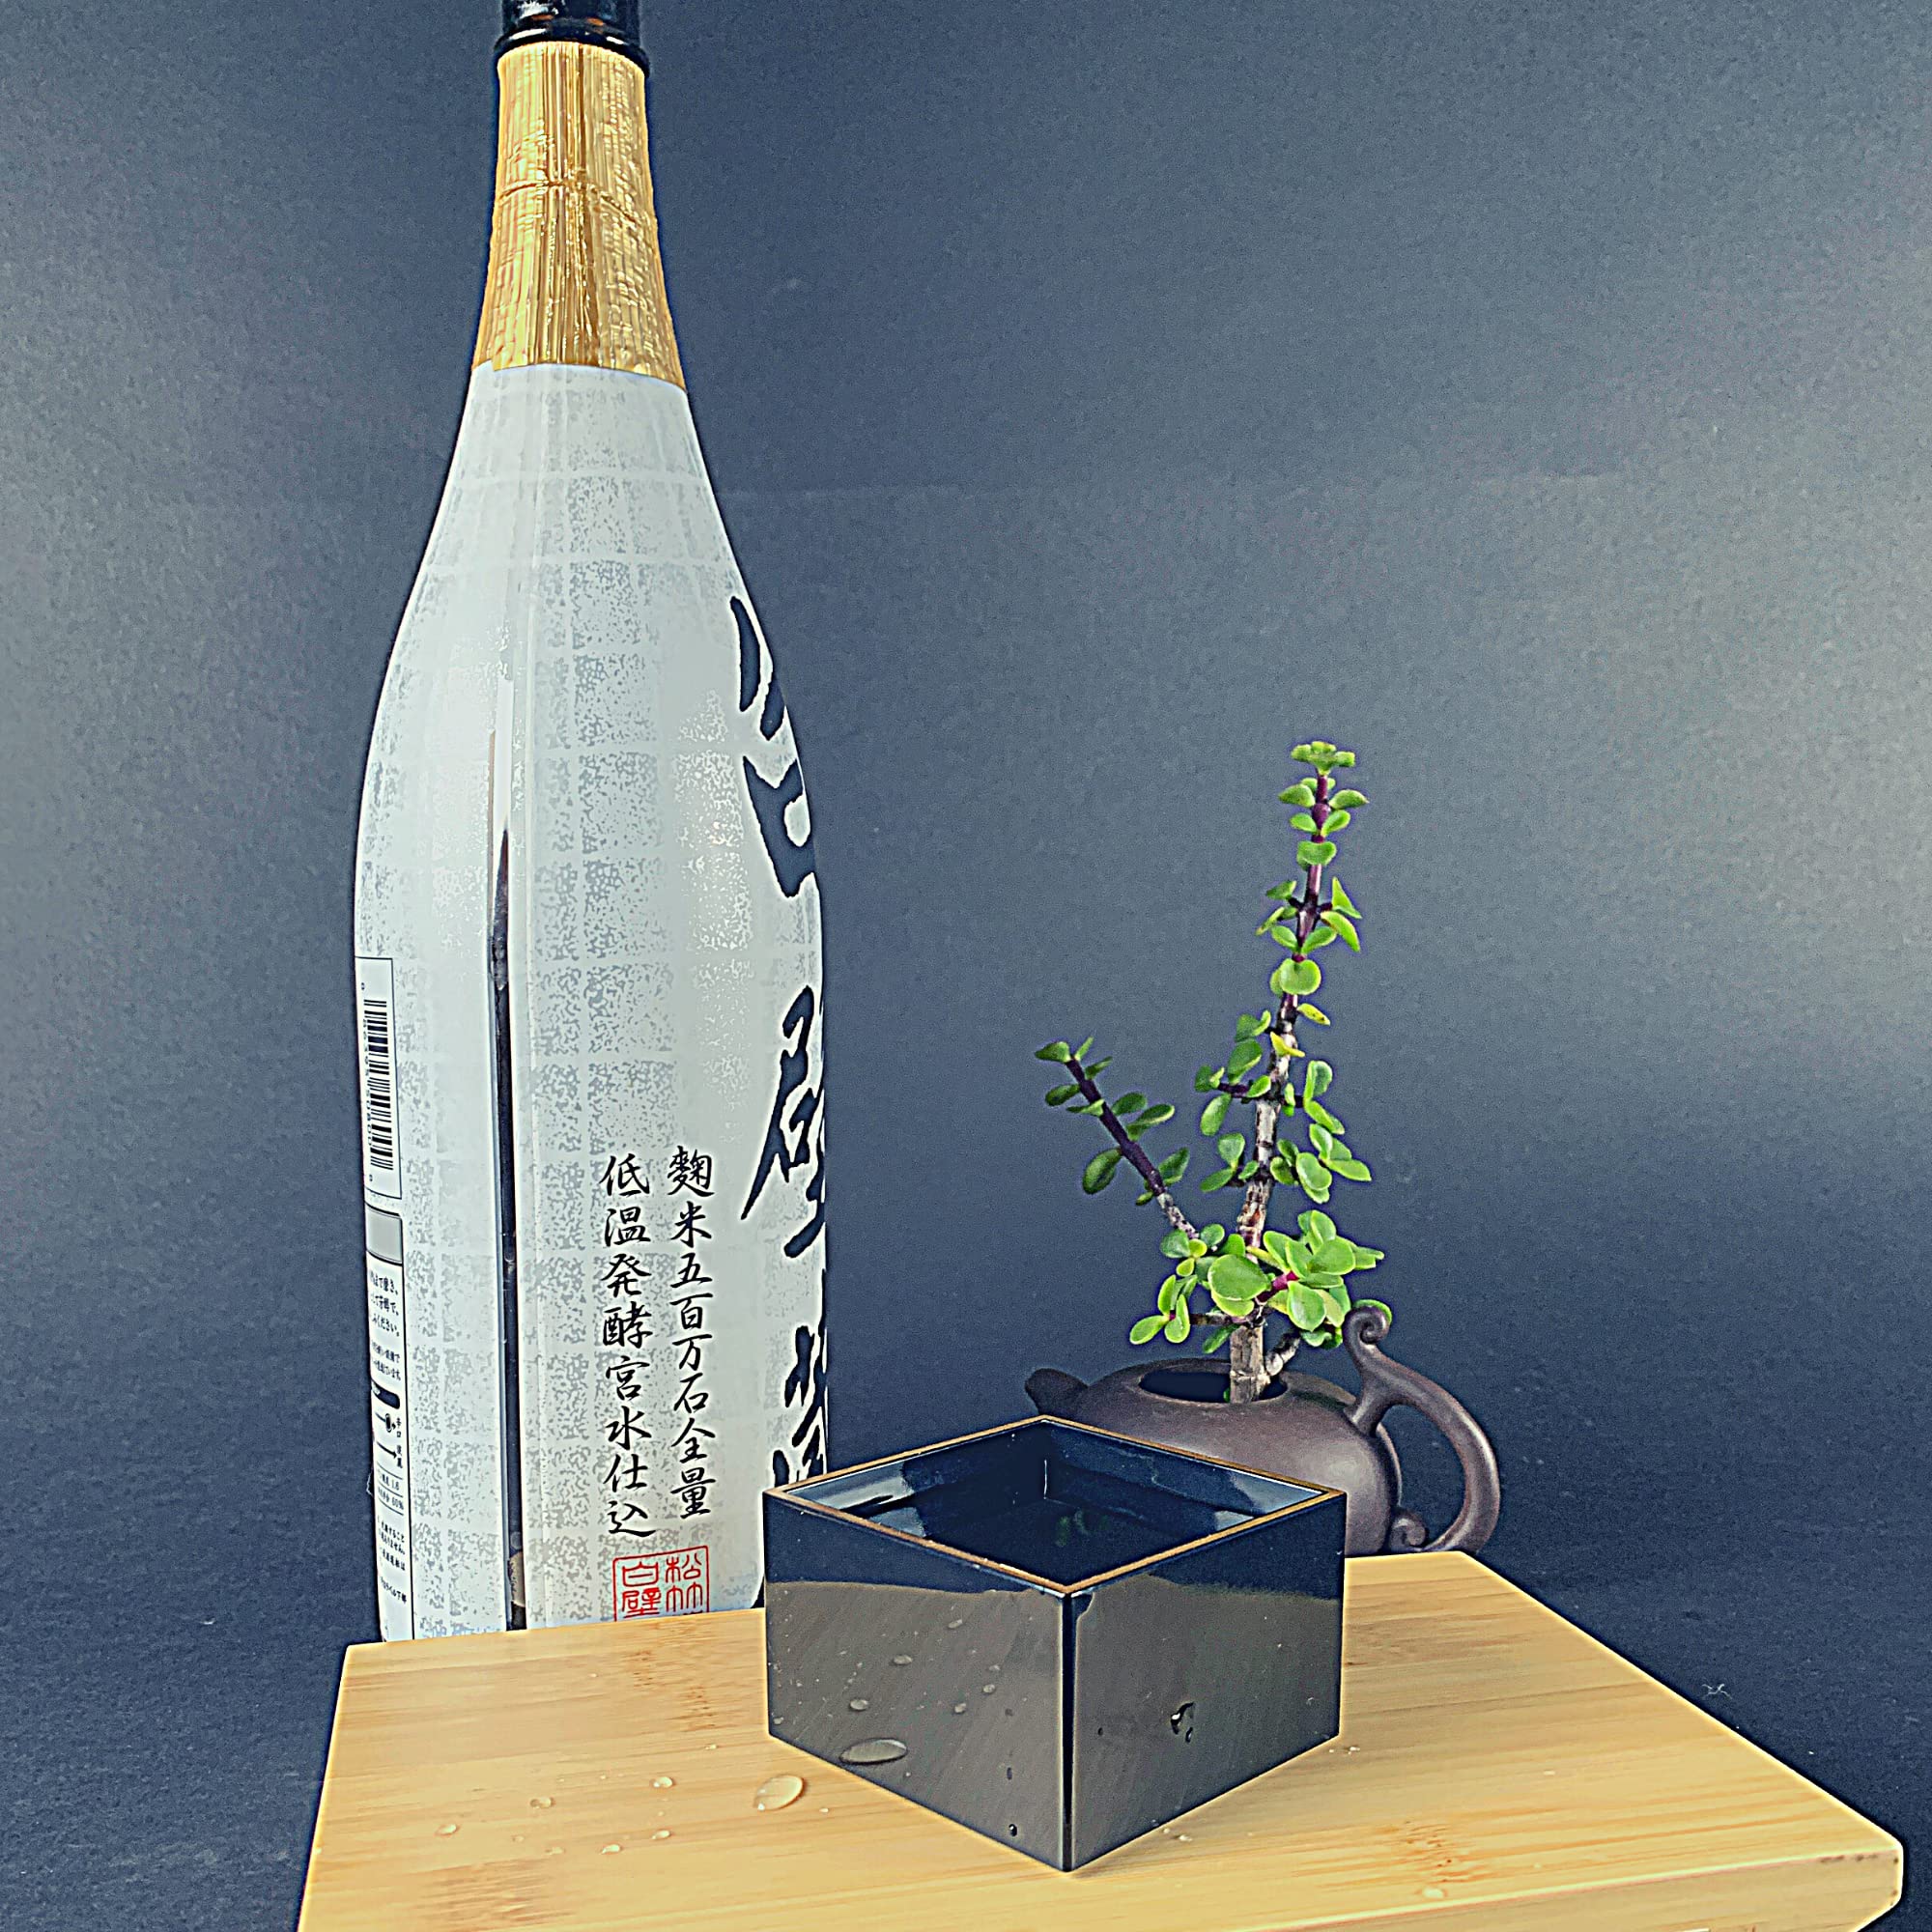 JapanBargain 4808, Masu Cups Japanese Sake Cups Plastic Lacquer Saki Cups, Made in Japan, Black Color Gold Rim, Set of 4